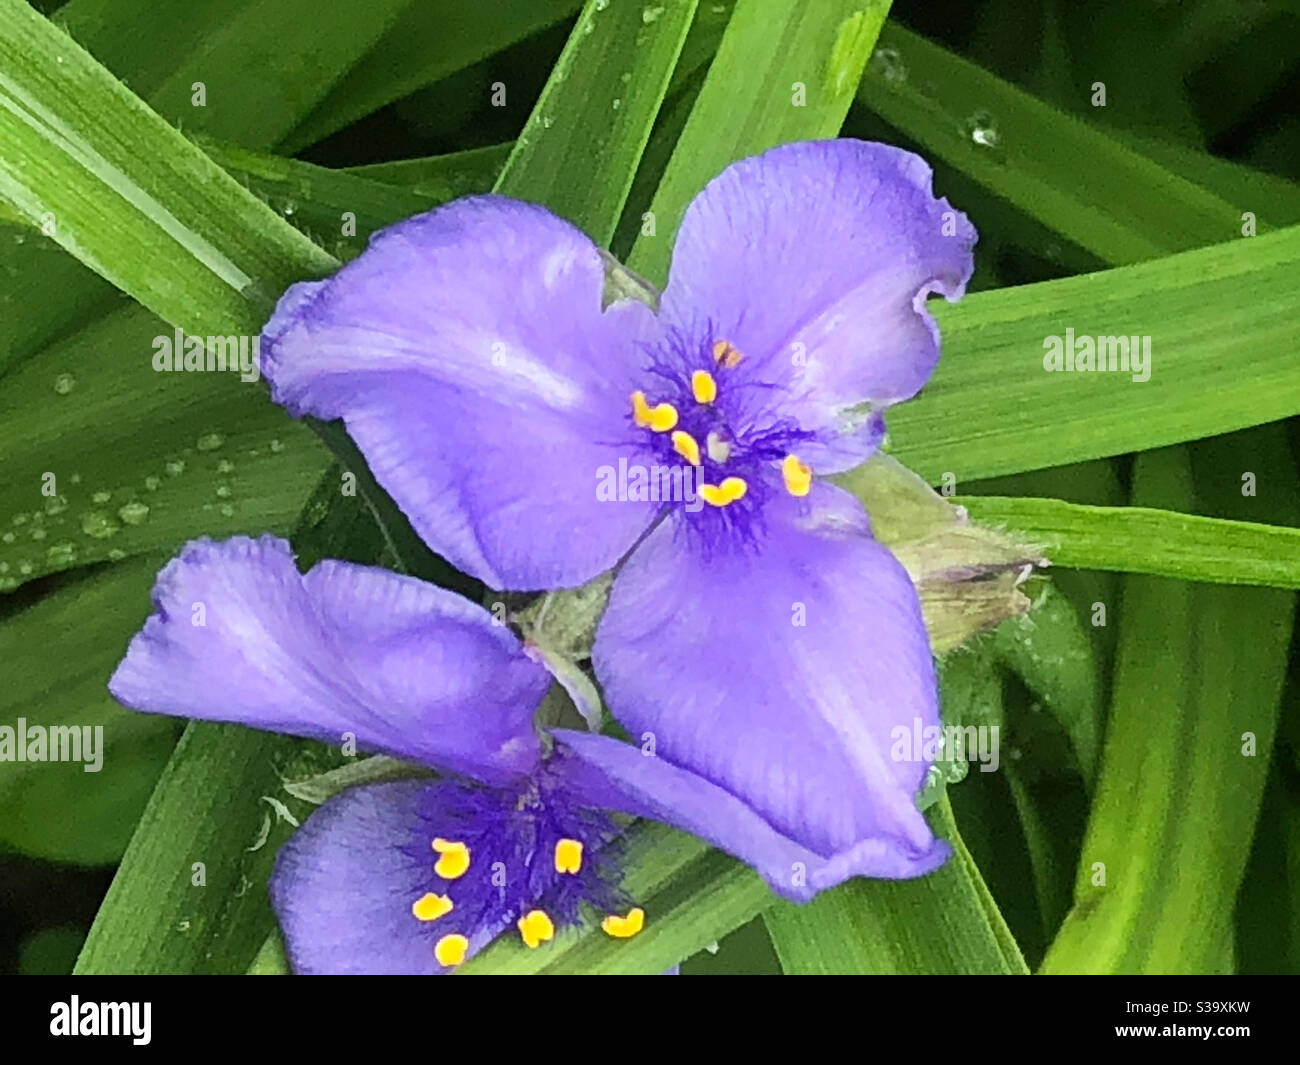 Wilde Blume, 3 Blütenblätter, lila, gelbe Mitte, grüne Blätter, Nahaufnahme, Abwärtswinkel, Natur, Natur, Pflanze Stockfoto